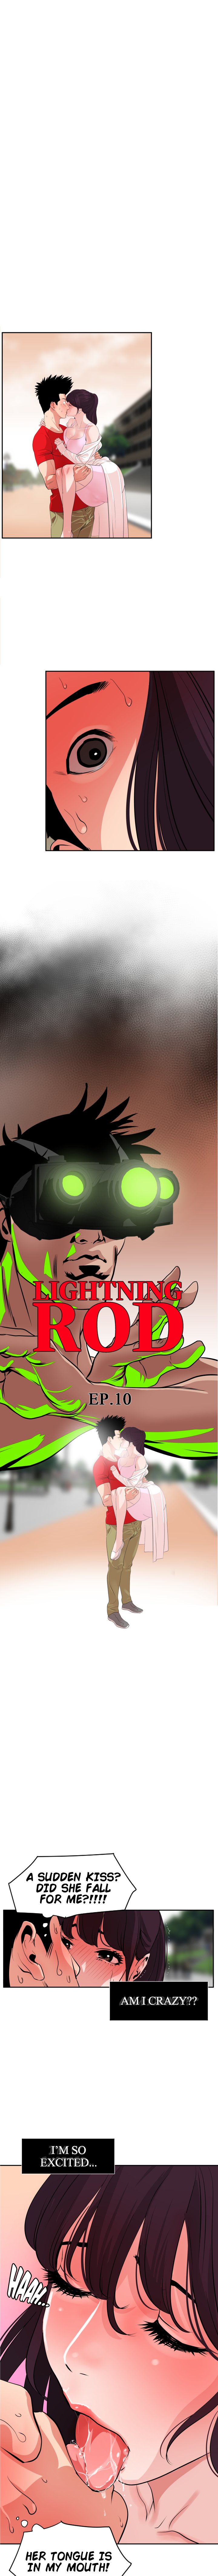 Lightning Rod - Page 2